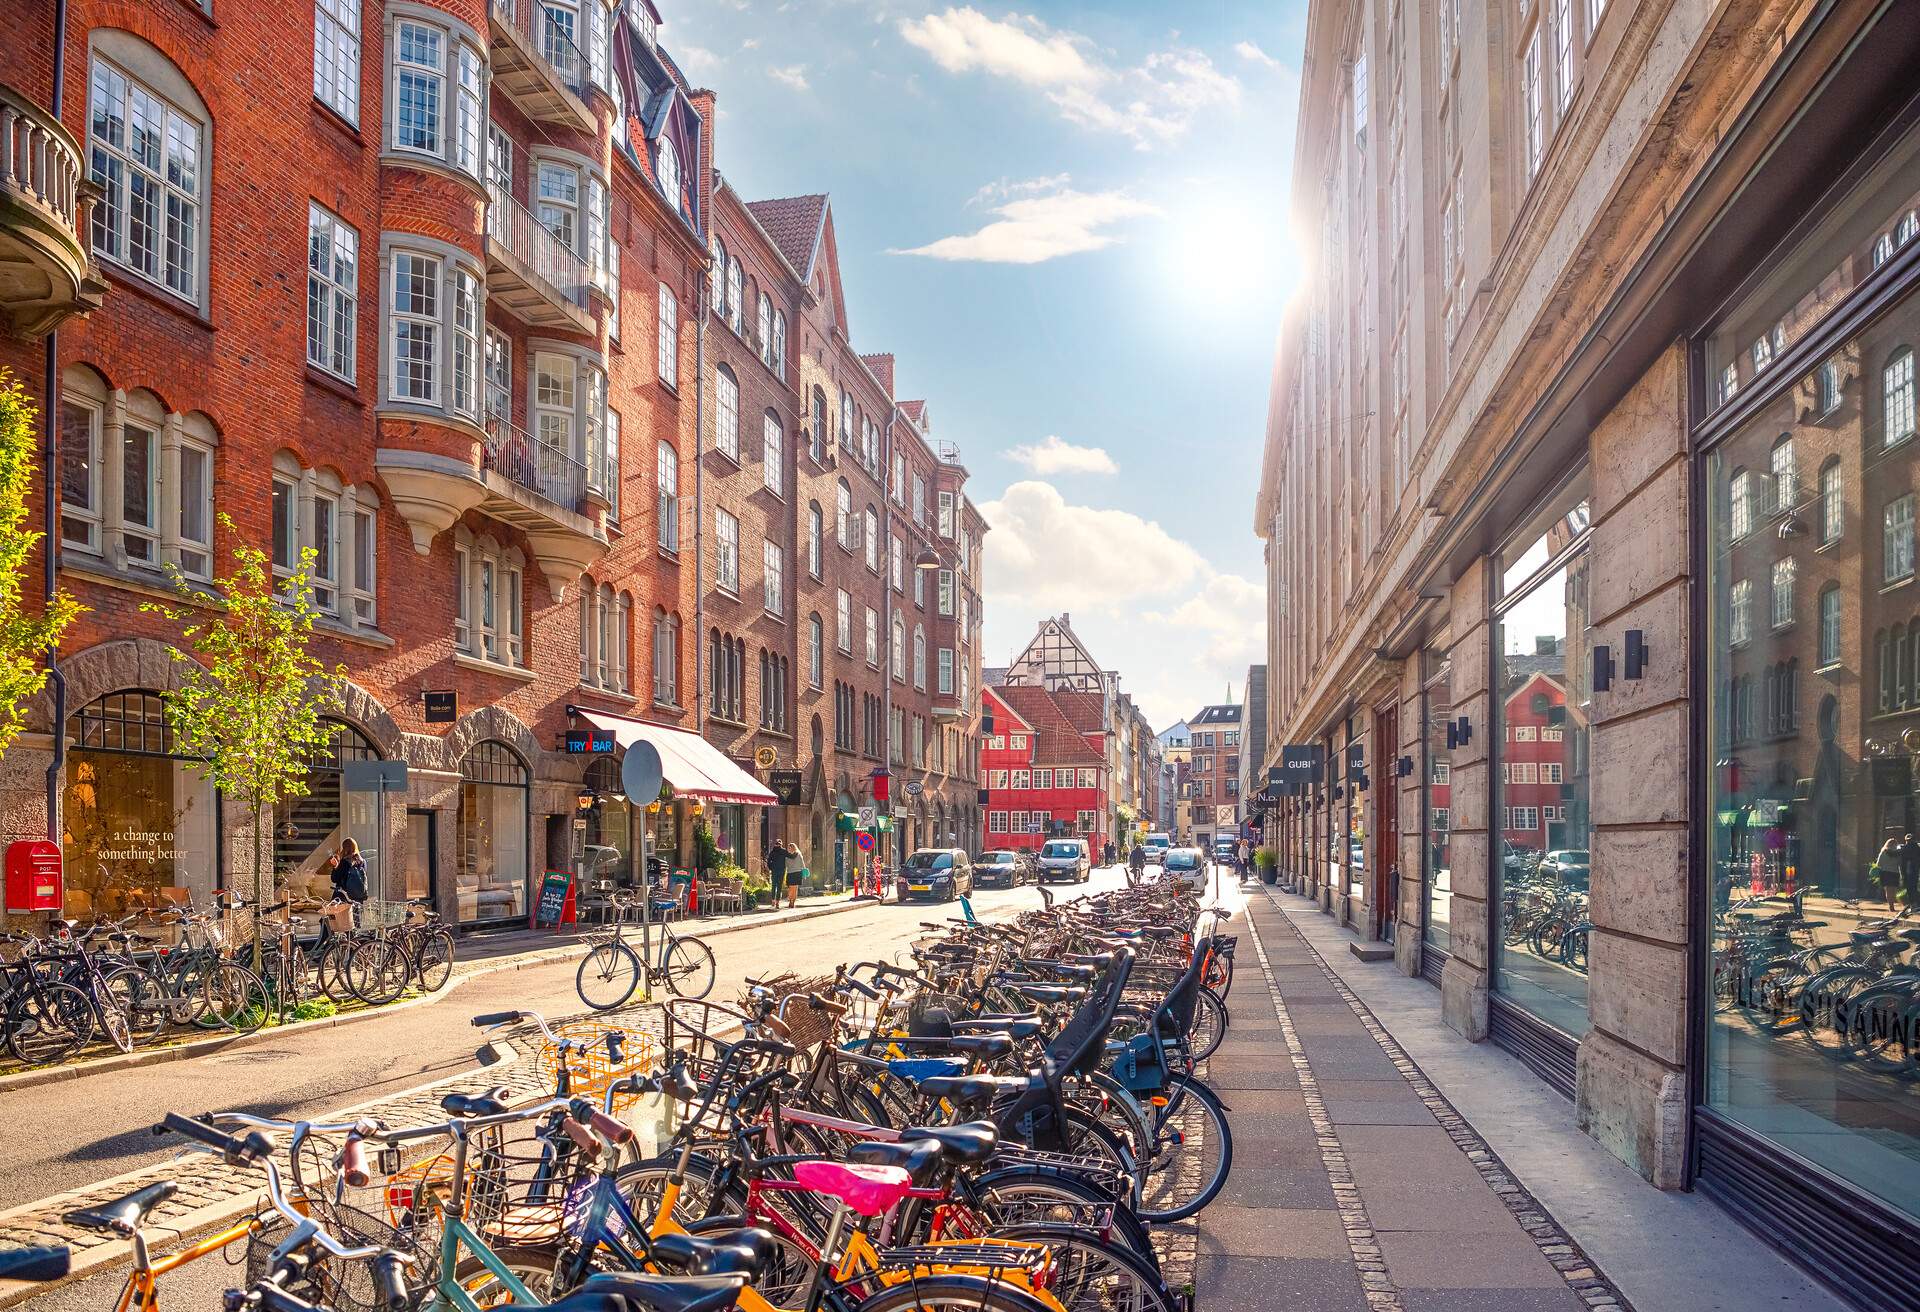 Many parked bikes on a narrow old Minter Street Møntergade in the Old Town of Copenhagen, Denmark